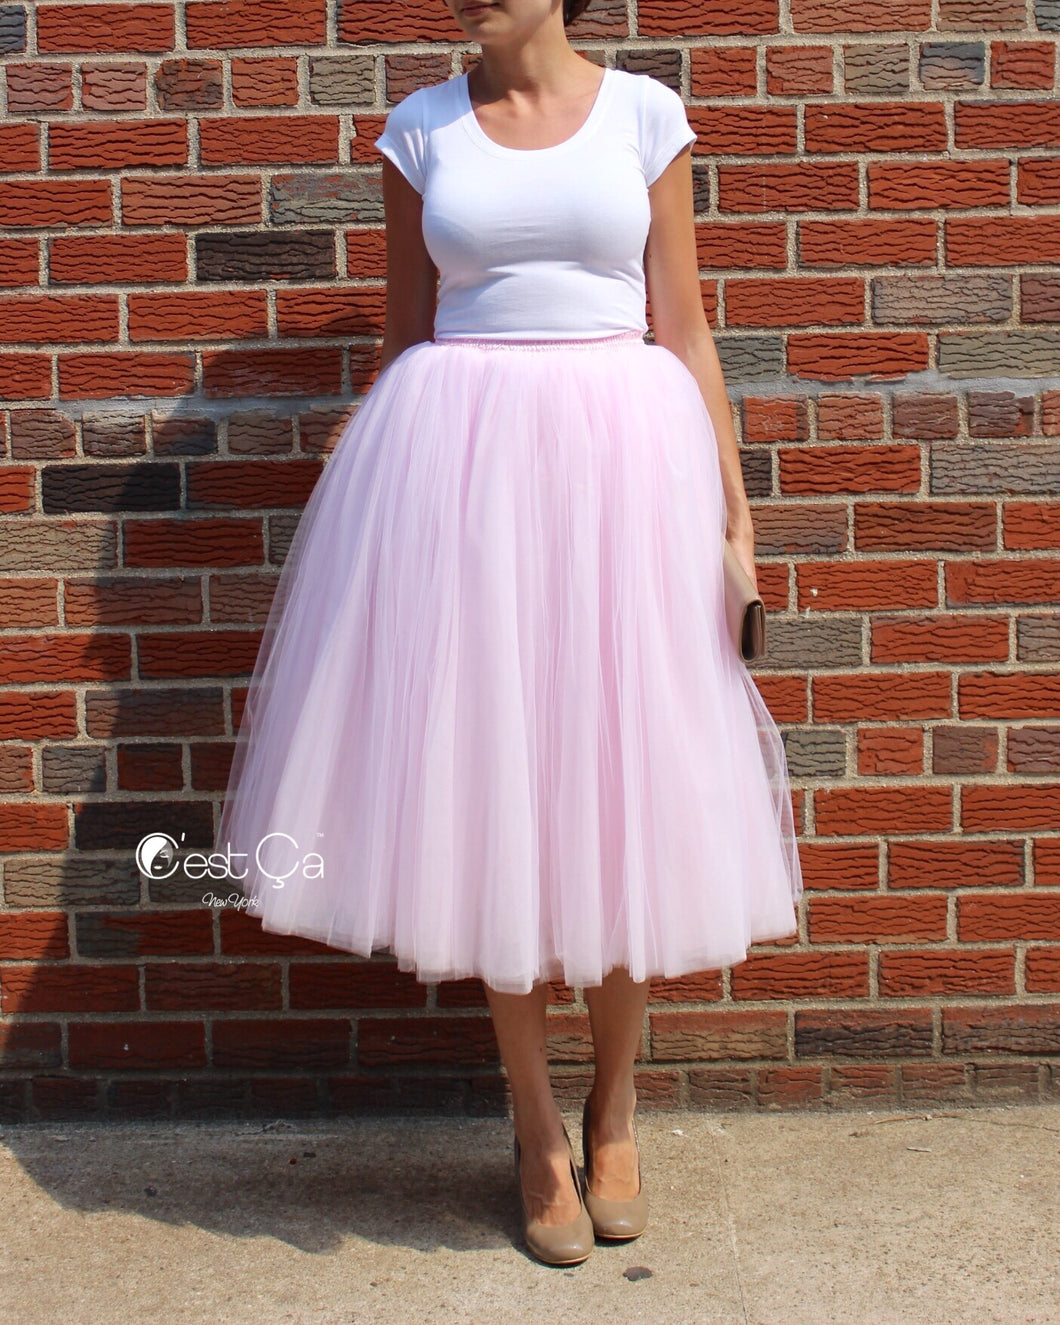 Tulle Tutu Skirt - Ivory Plus Size!!!!, My Style, Pinterest